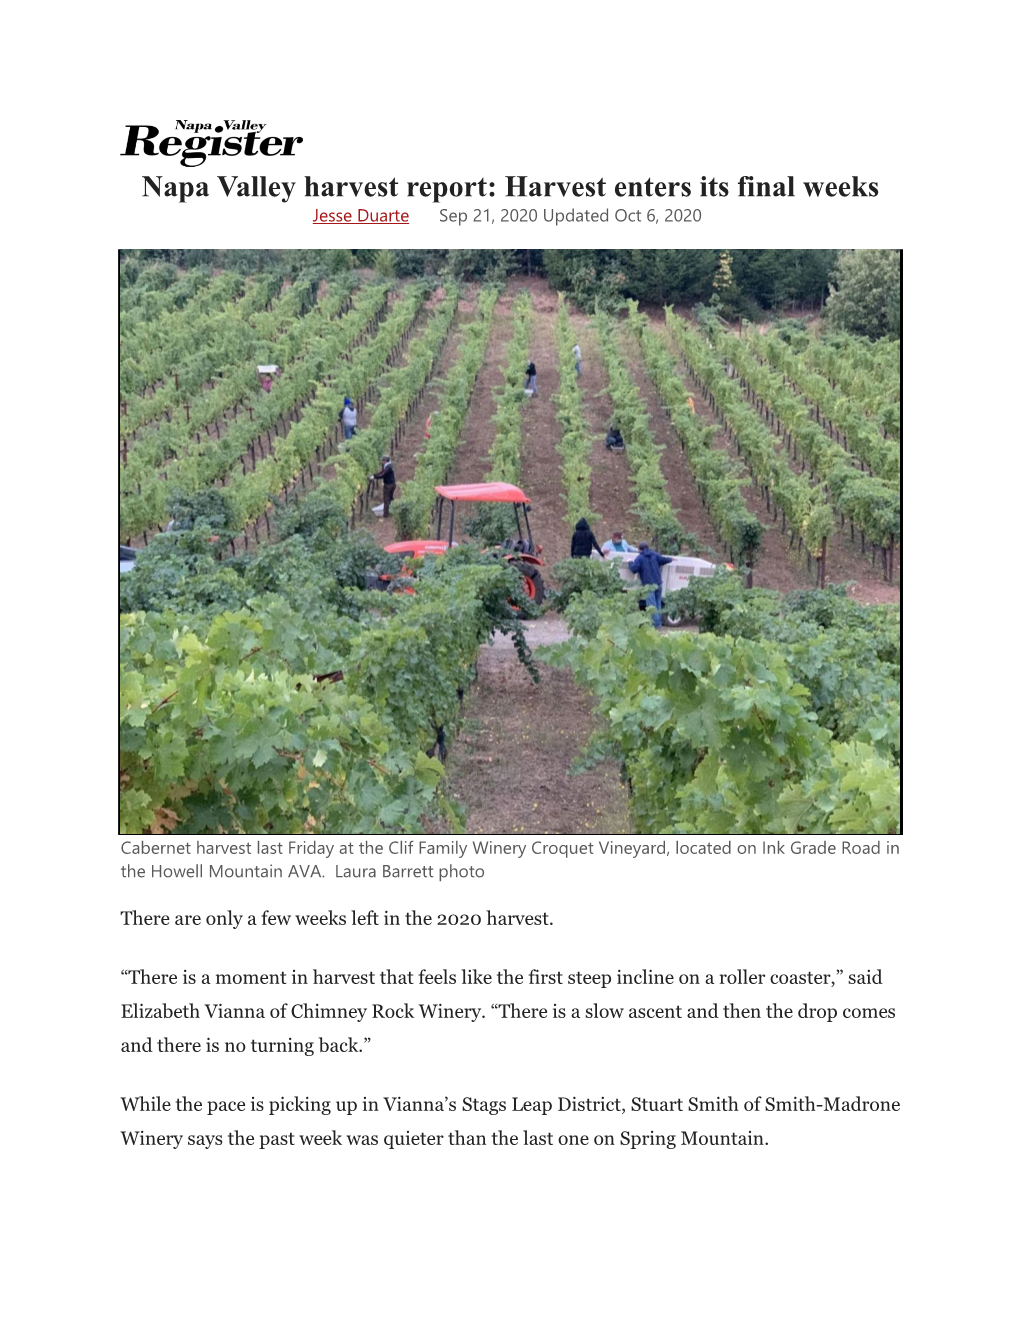 Napa Valley Harvest Report: Harvest Enters Its Final Weeks Jesse Duarte Sep 21, 2020 Updated Oct 6, 2020